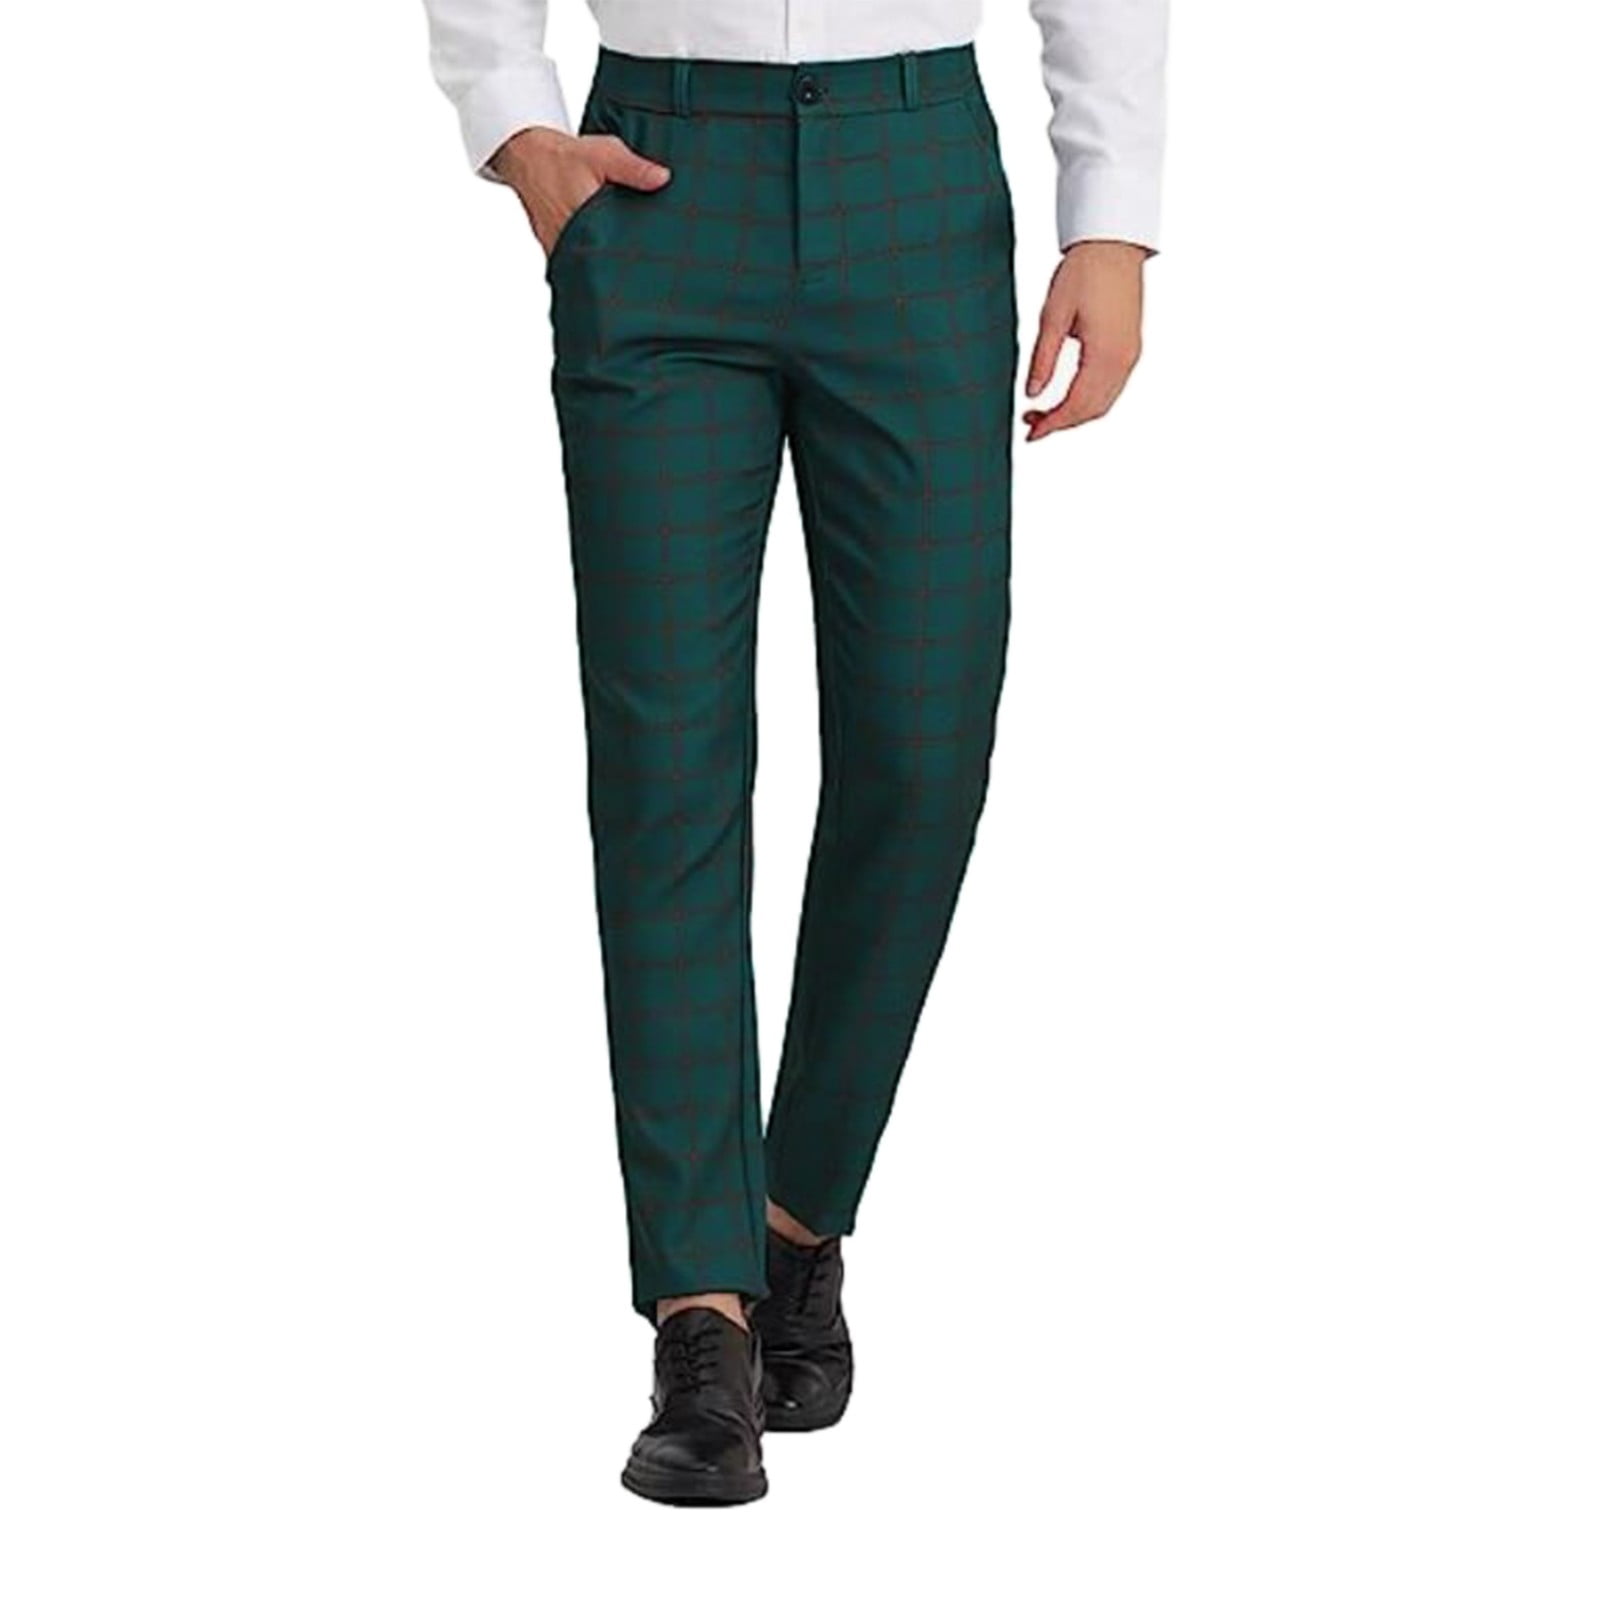 Slim Fit Linen suit trousers - Grey-green - Men | H&M IN